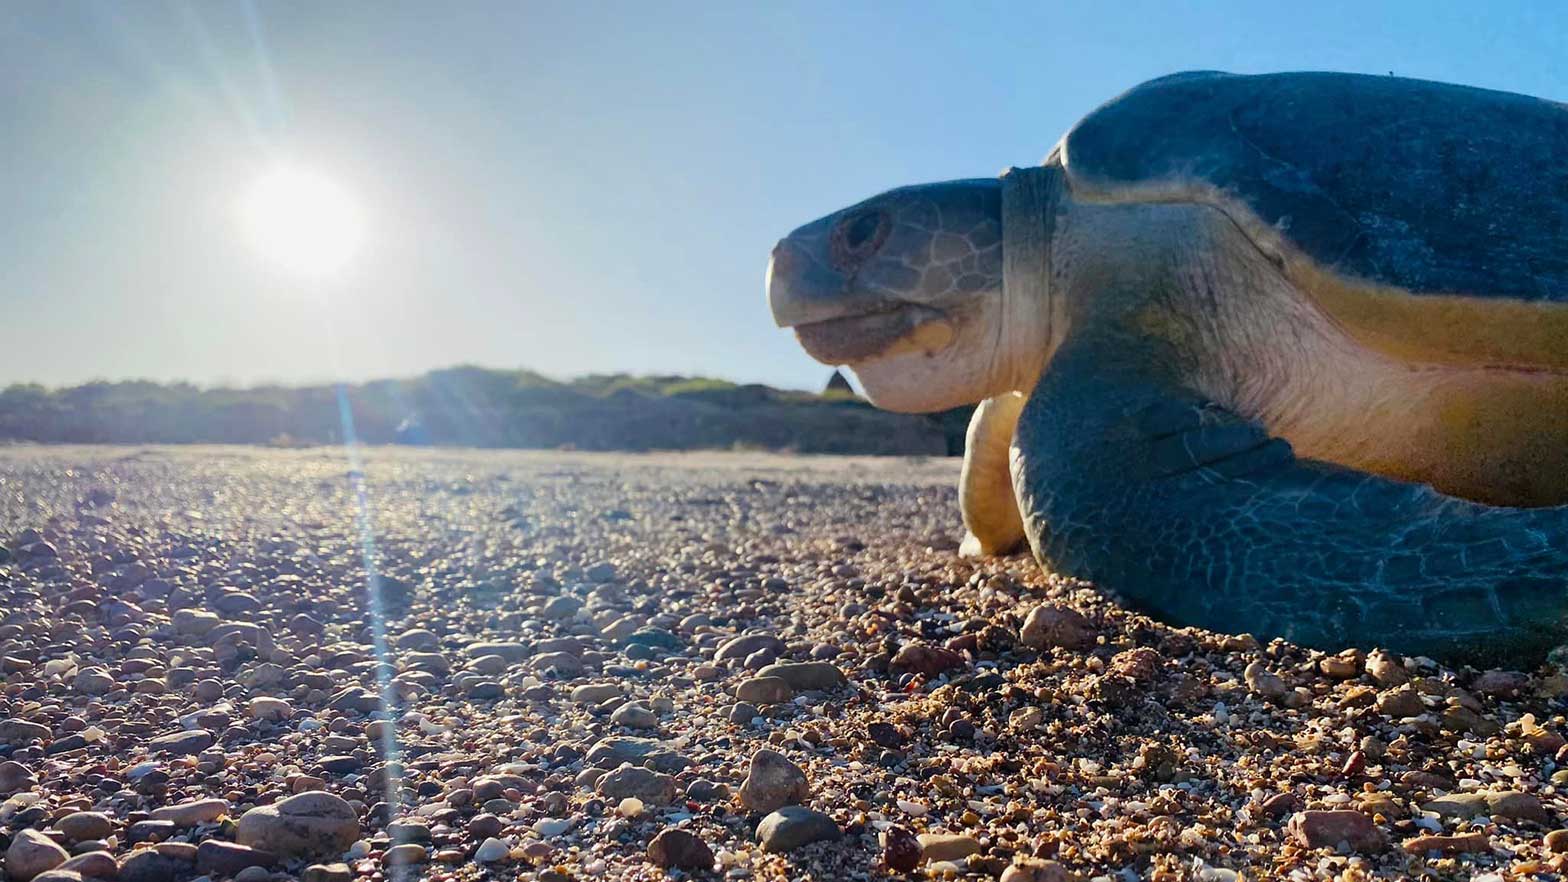 A flatback sea turtle retuns to the ocean after nesting on an Australian island.